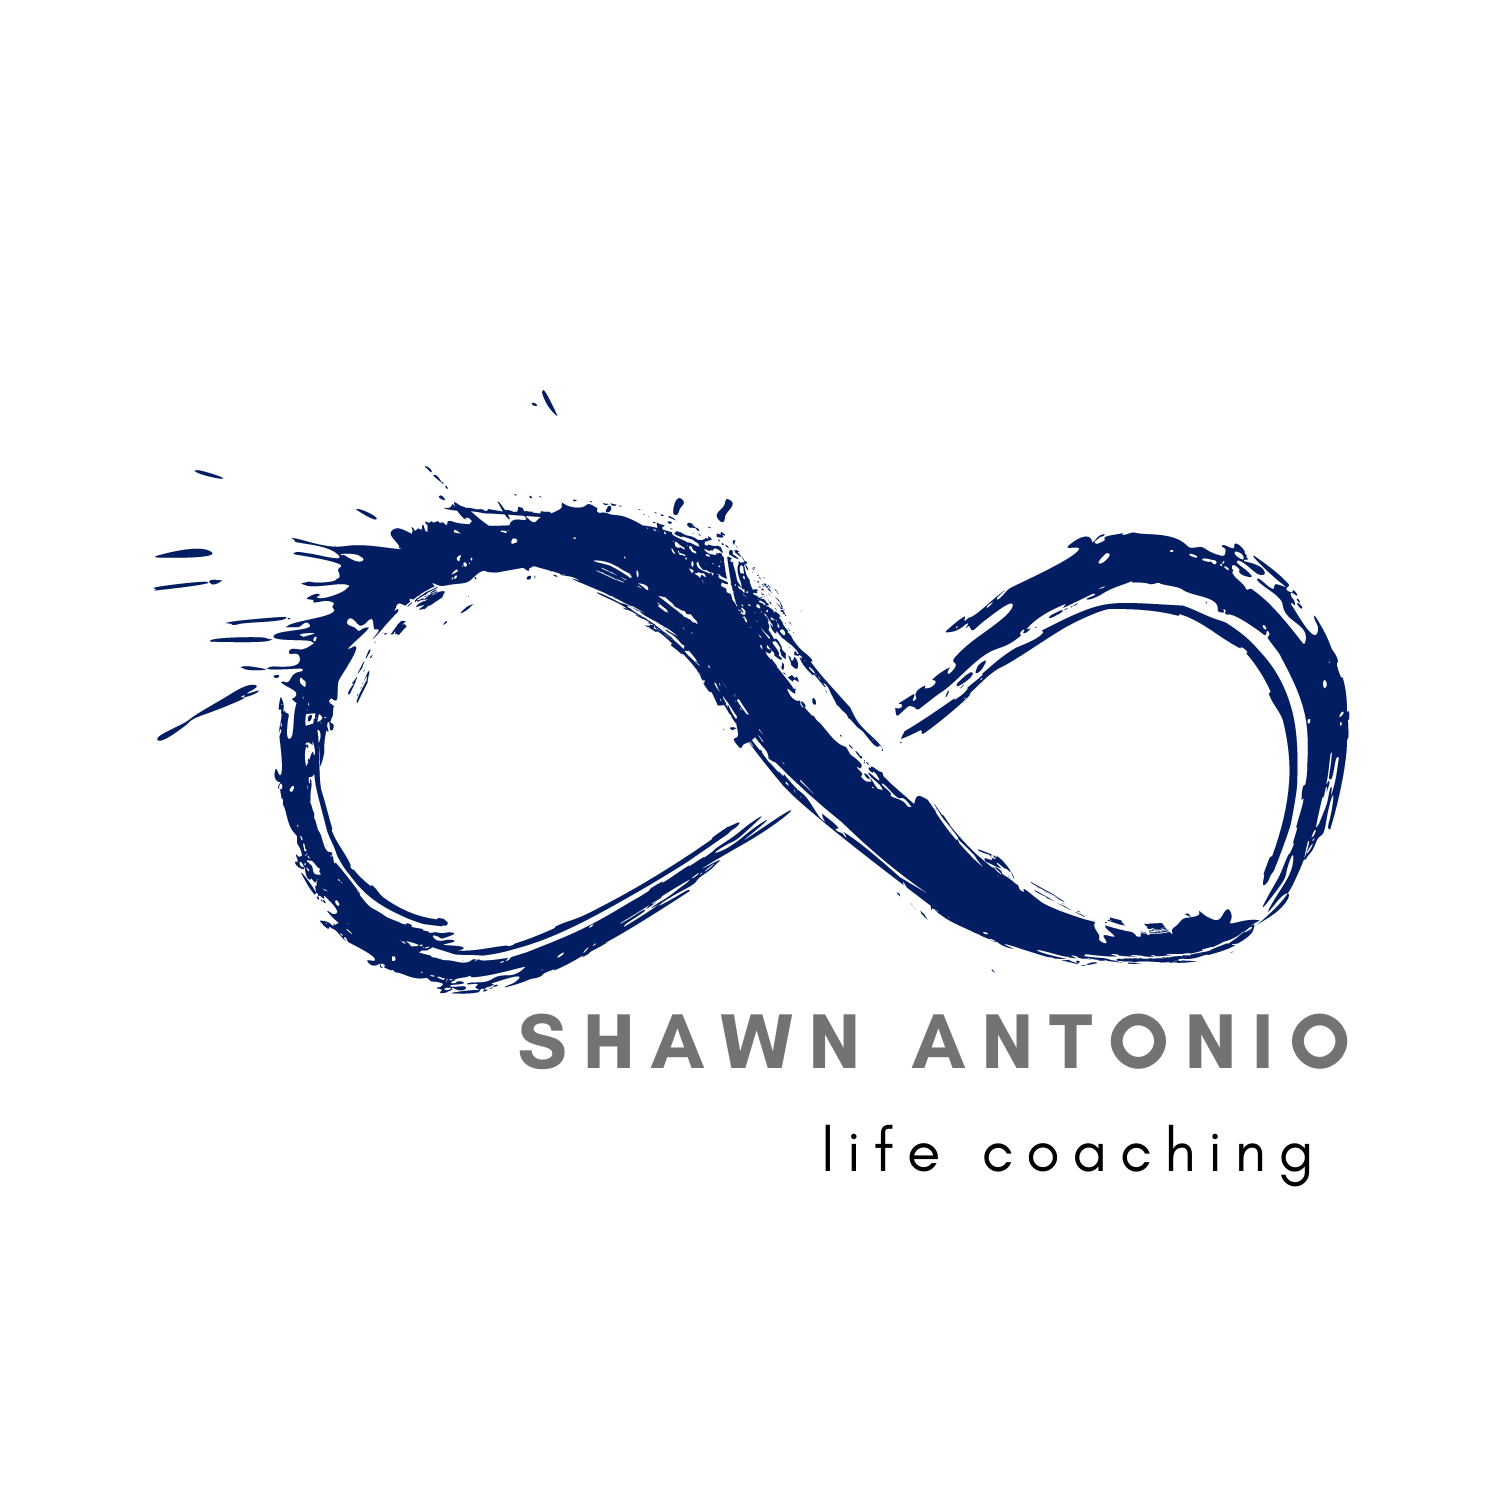 Shawn Antonio Life Coaching